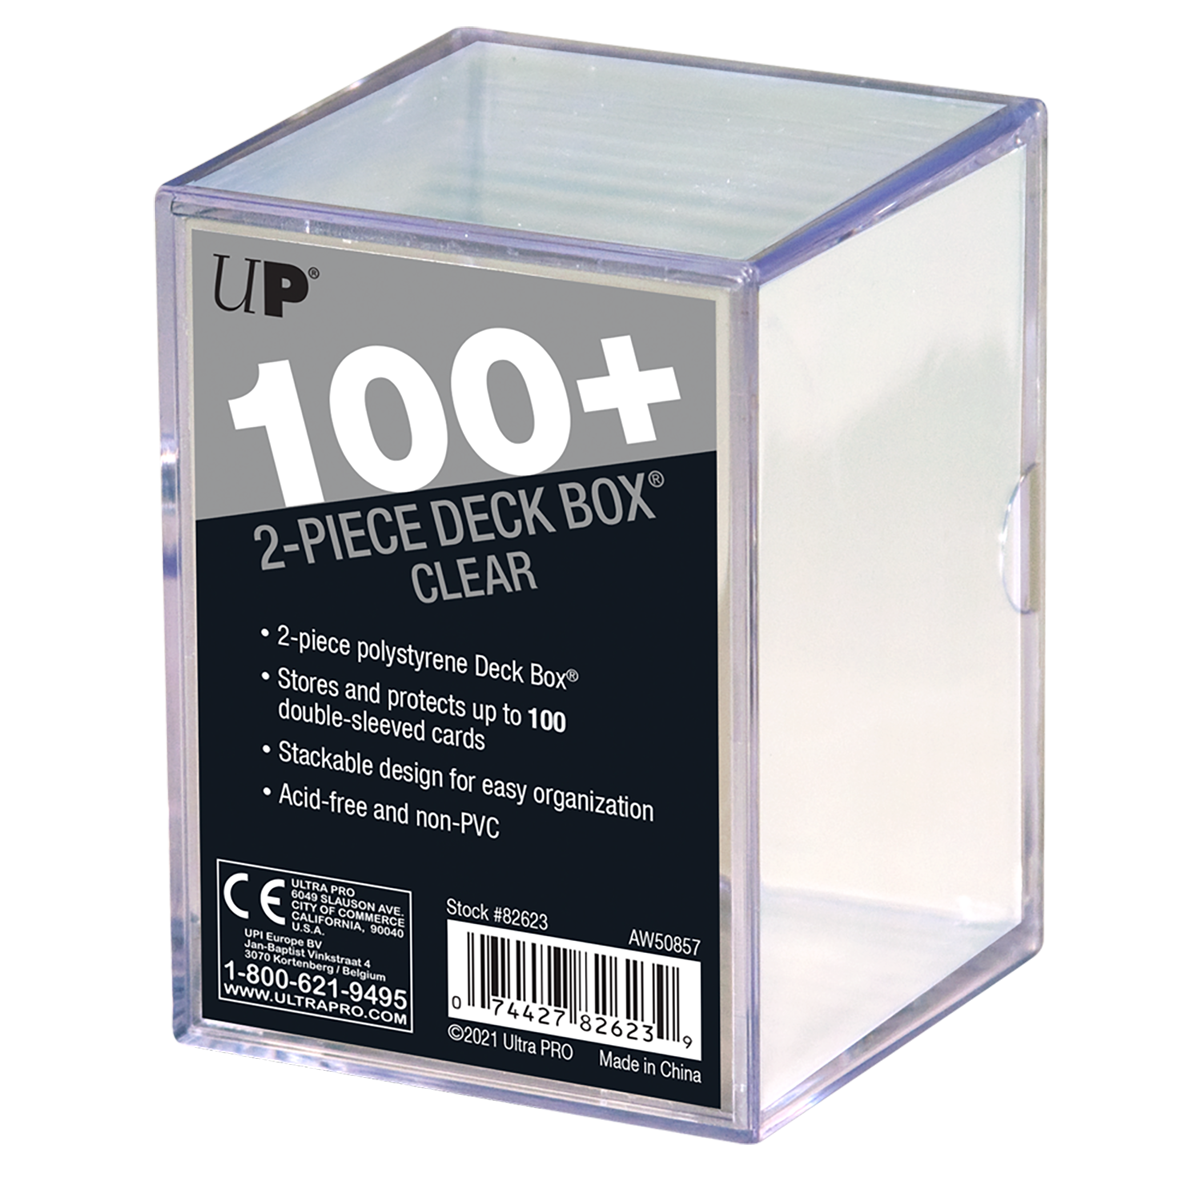 2-Piece Clear 100+ Deck Box | Ultra PRO International